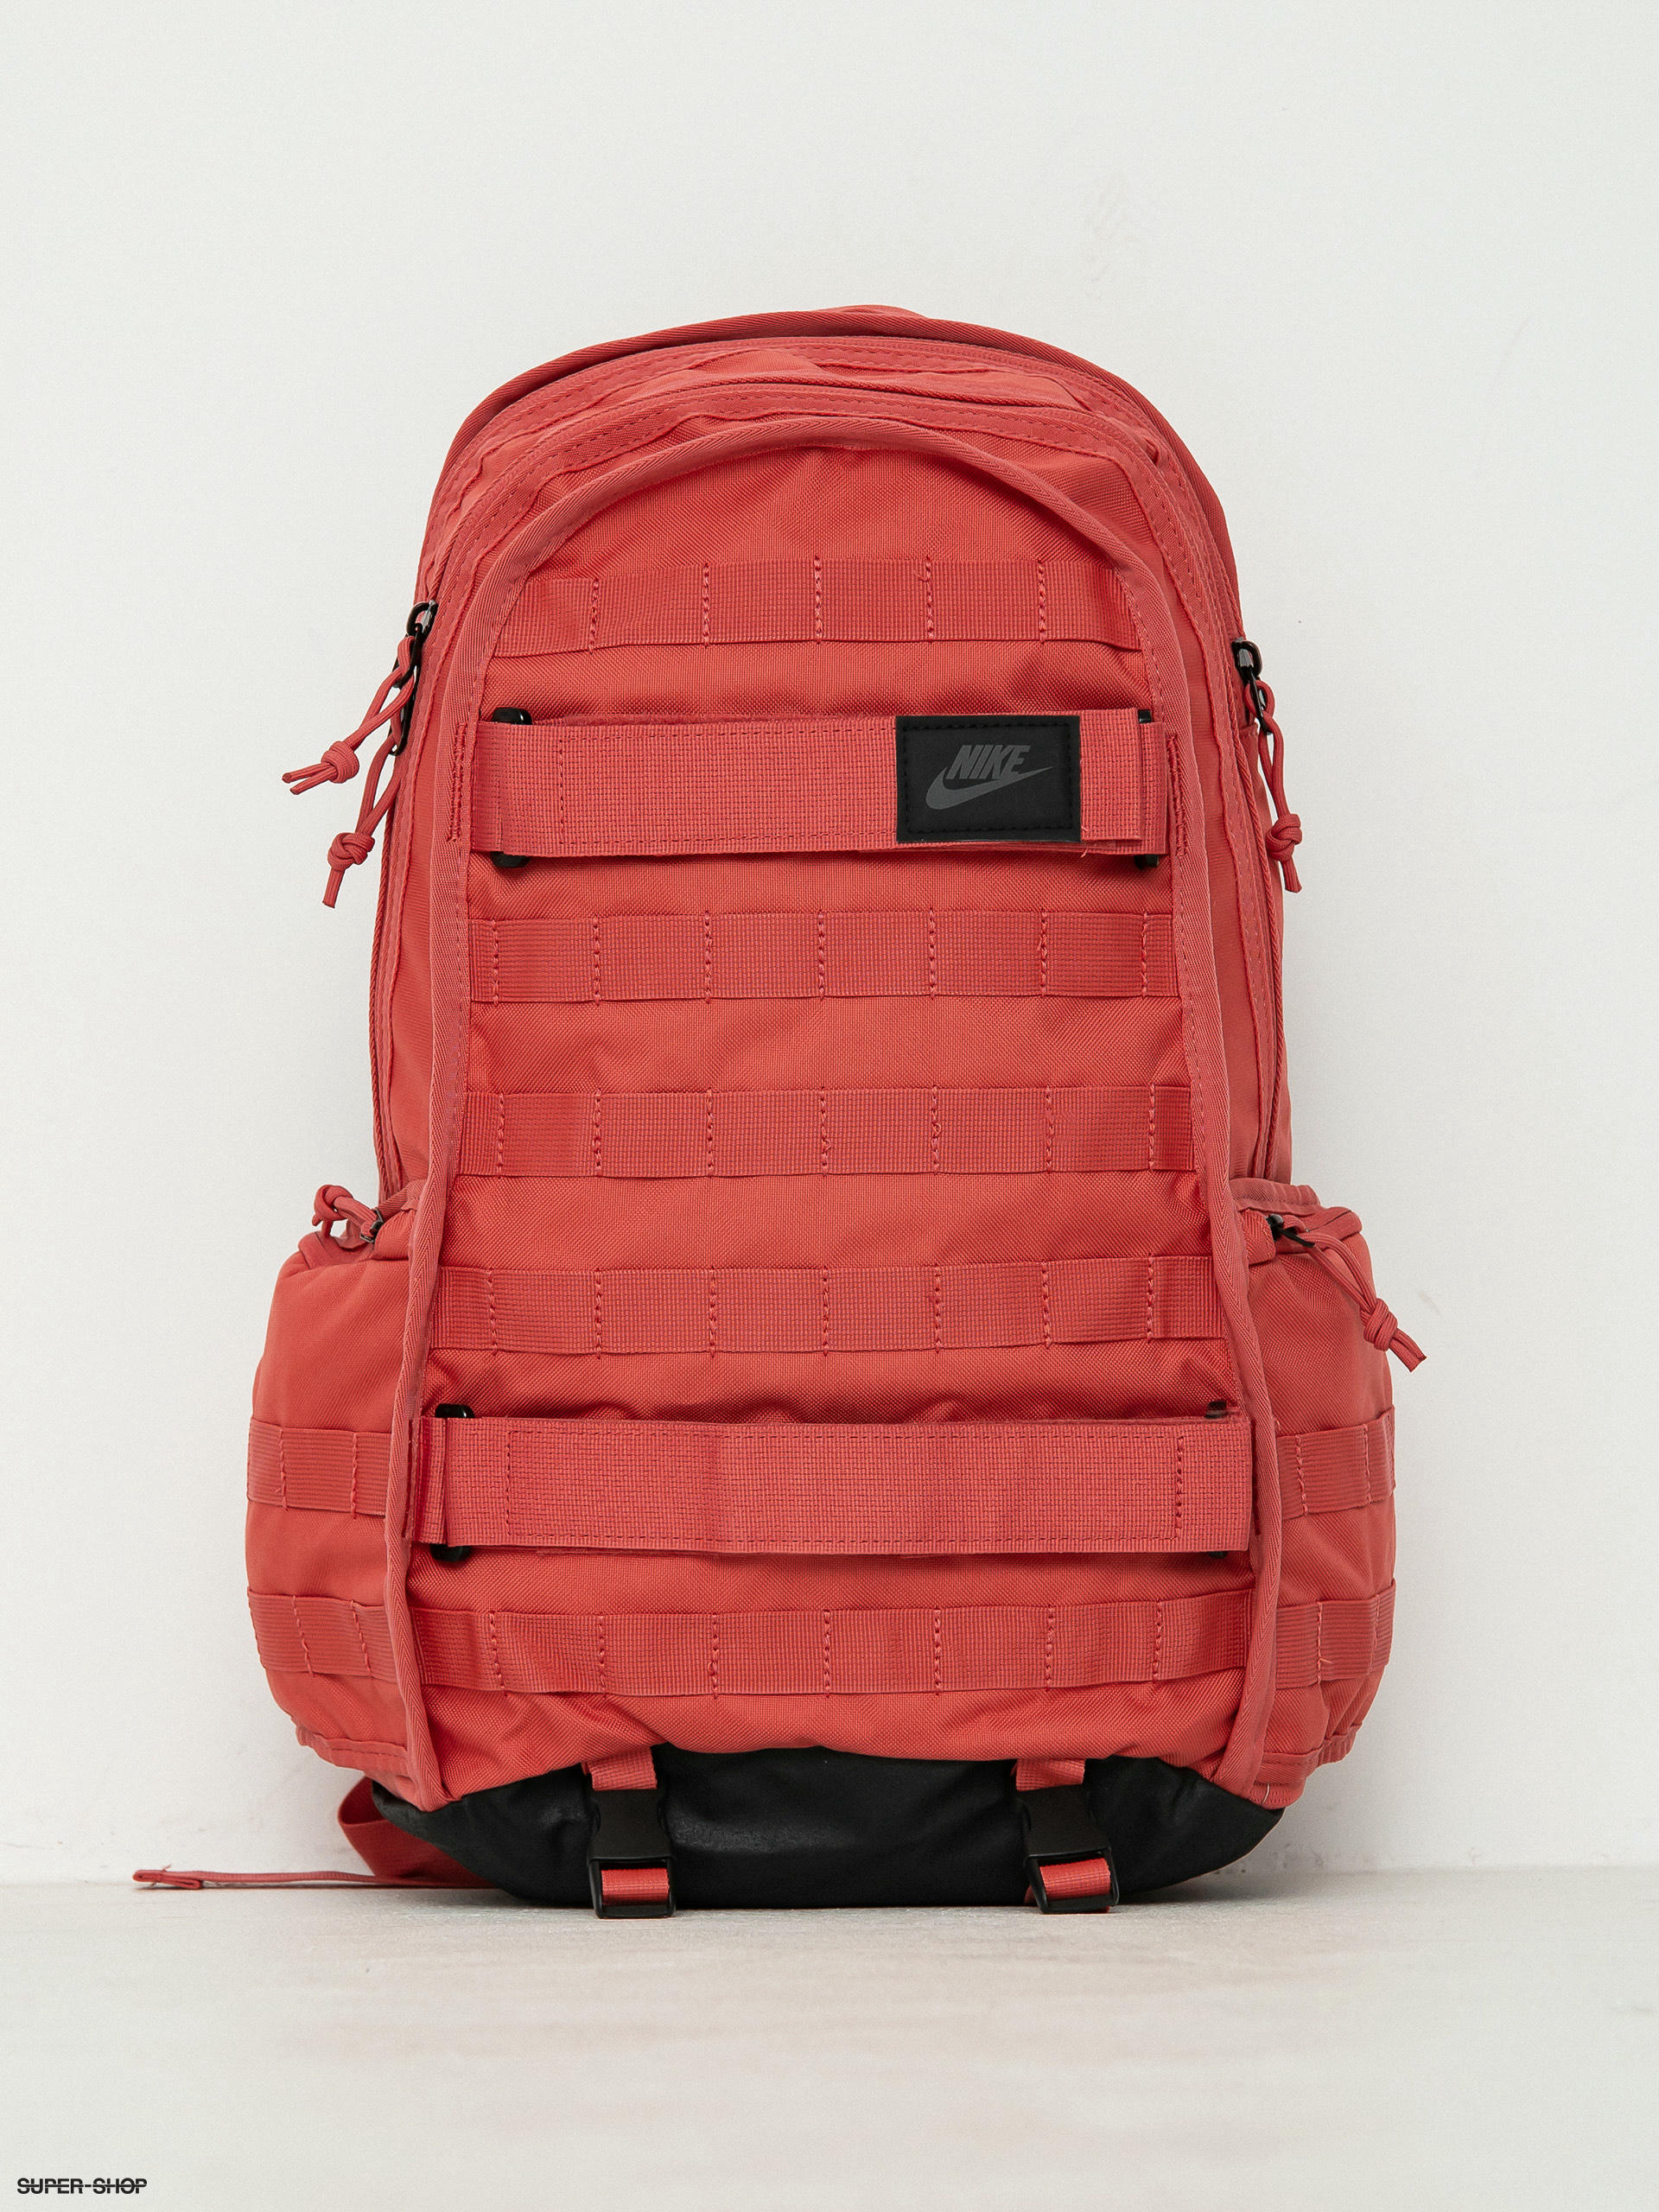 Nike Academy Team Soccer Backpack (Red)